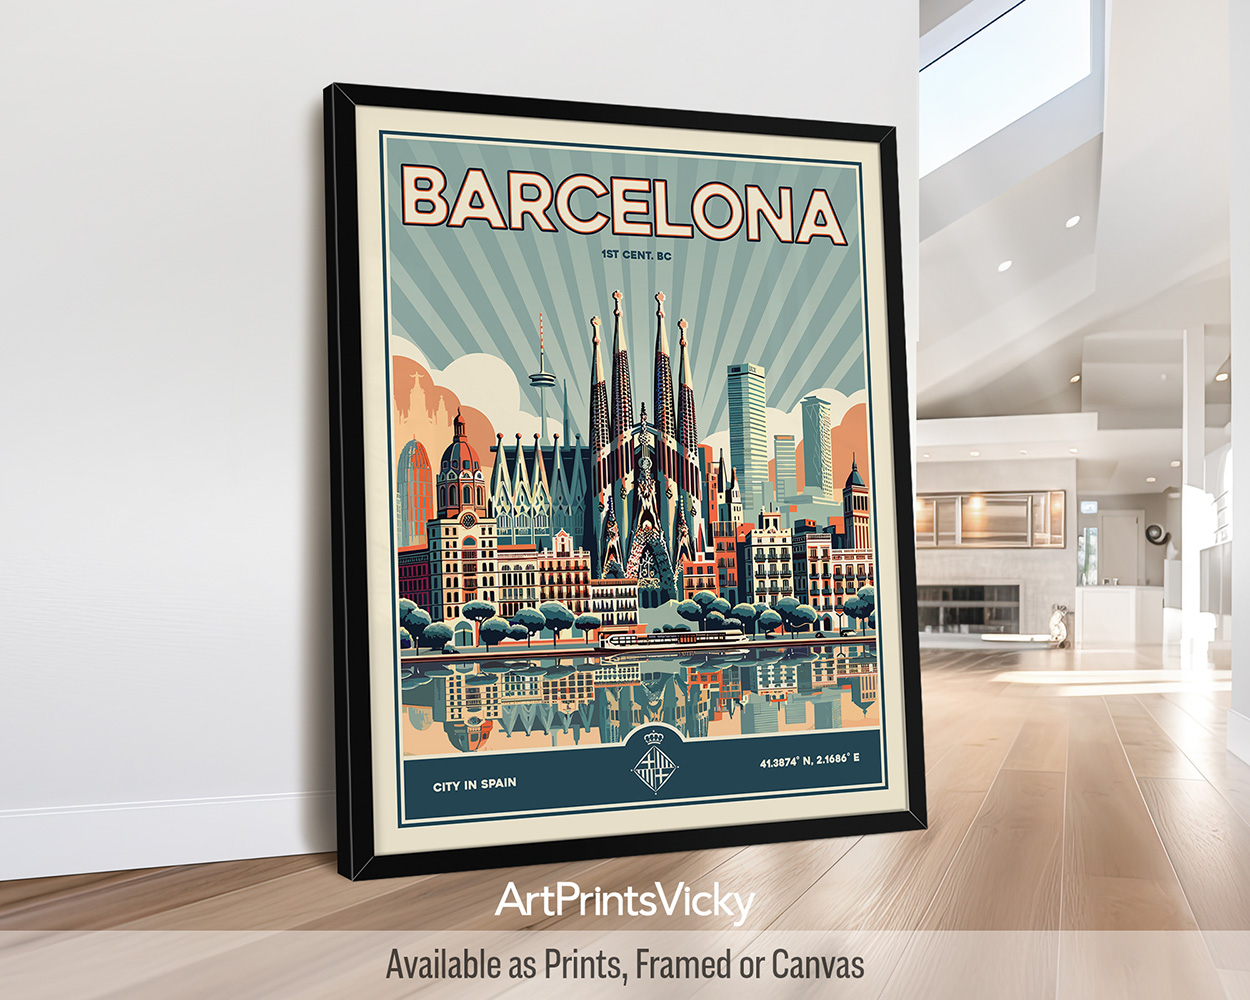 Barcelona Poster Inspired by Retro Travel Art by ArtPrintsVicky